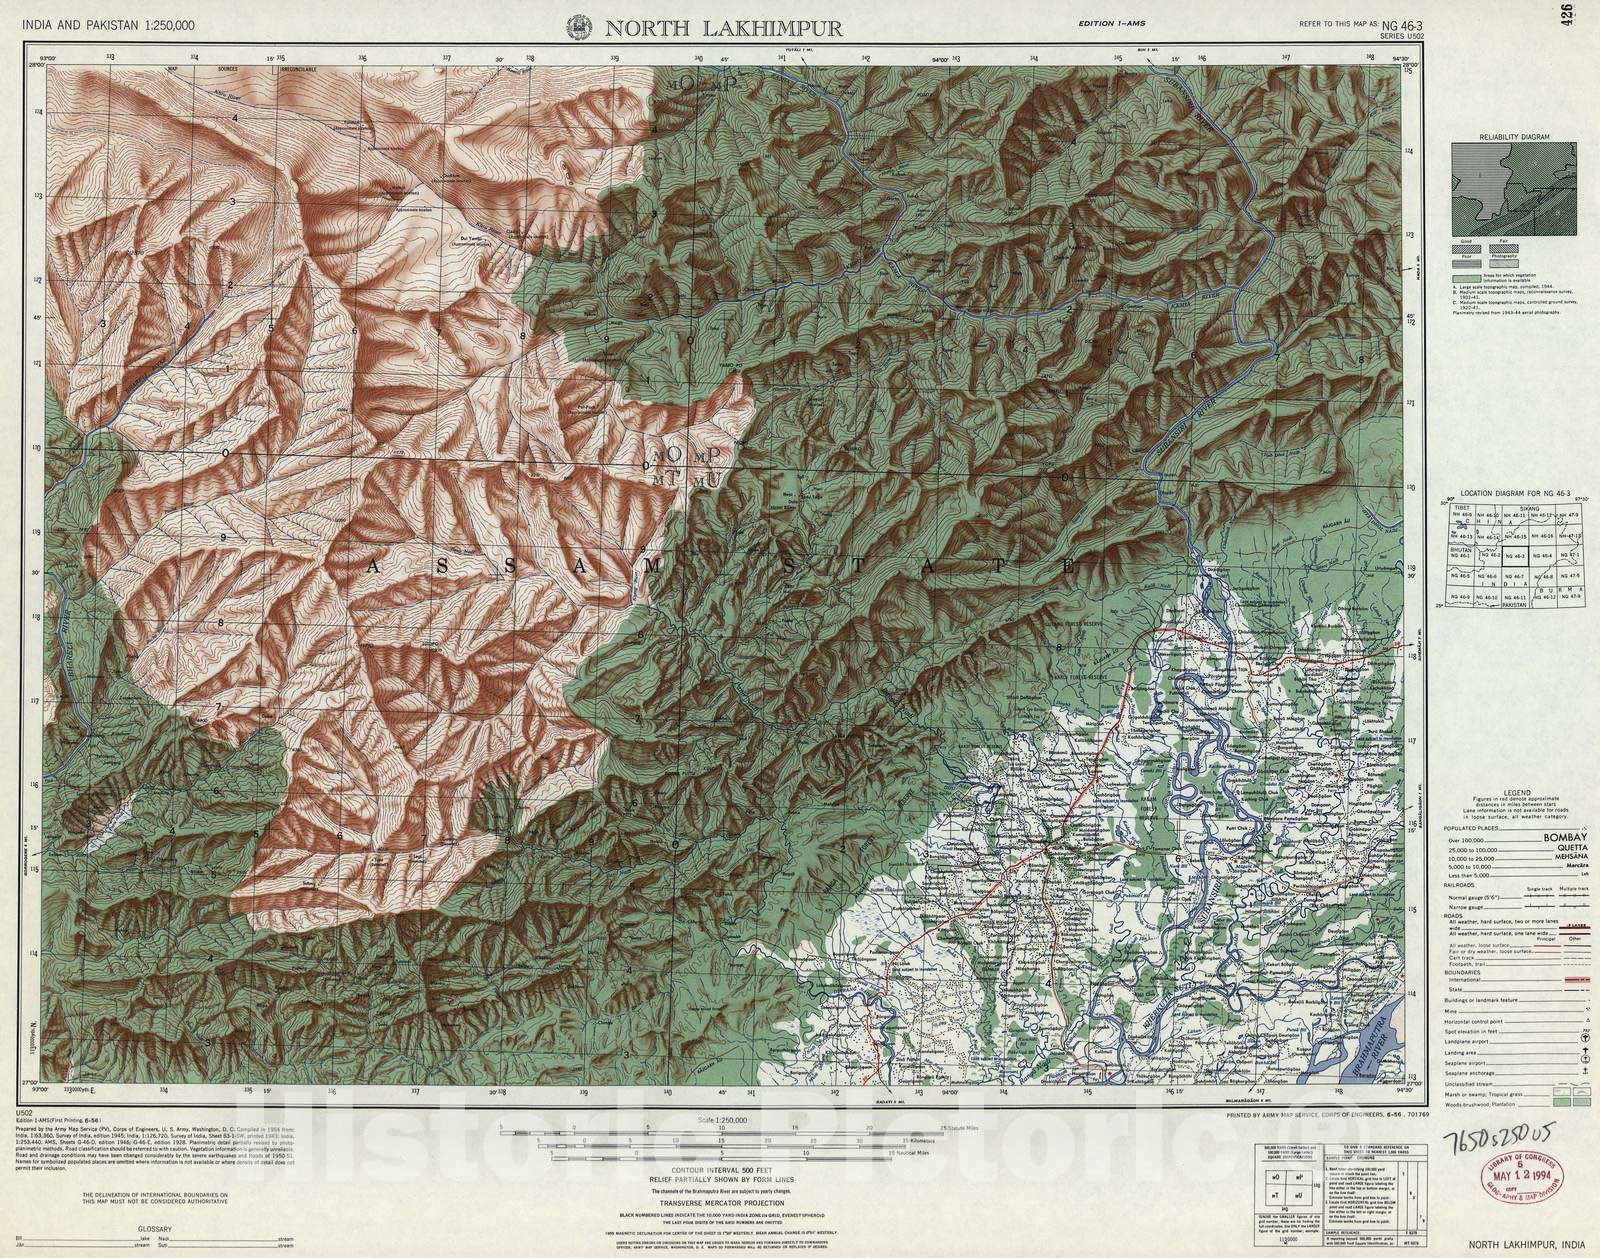 Historic 1955 Map - India and Pakistan 1:250,000. - North Lakhimpur, India 1956